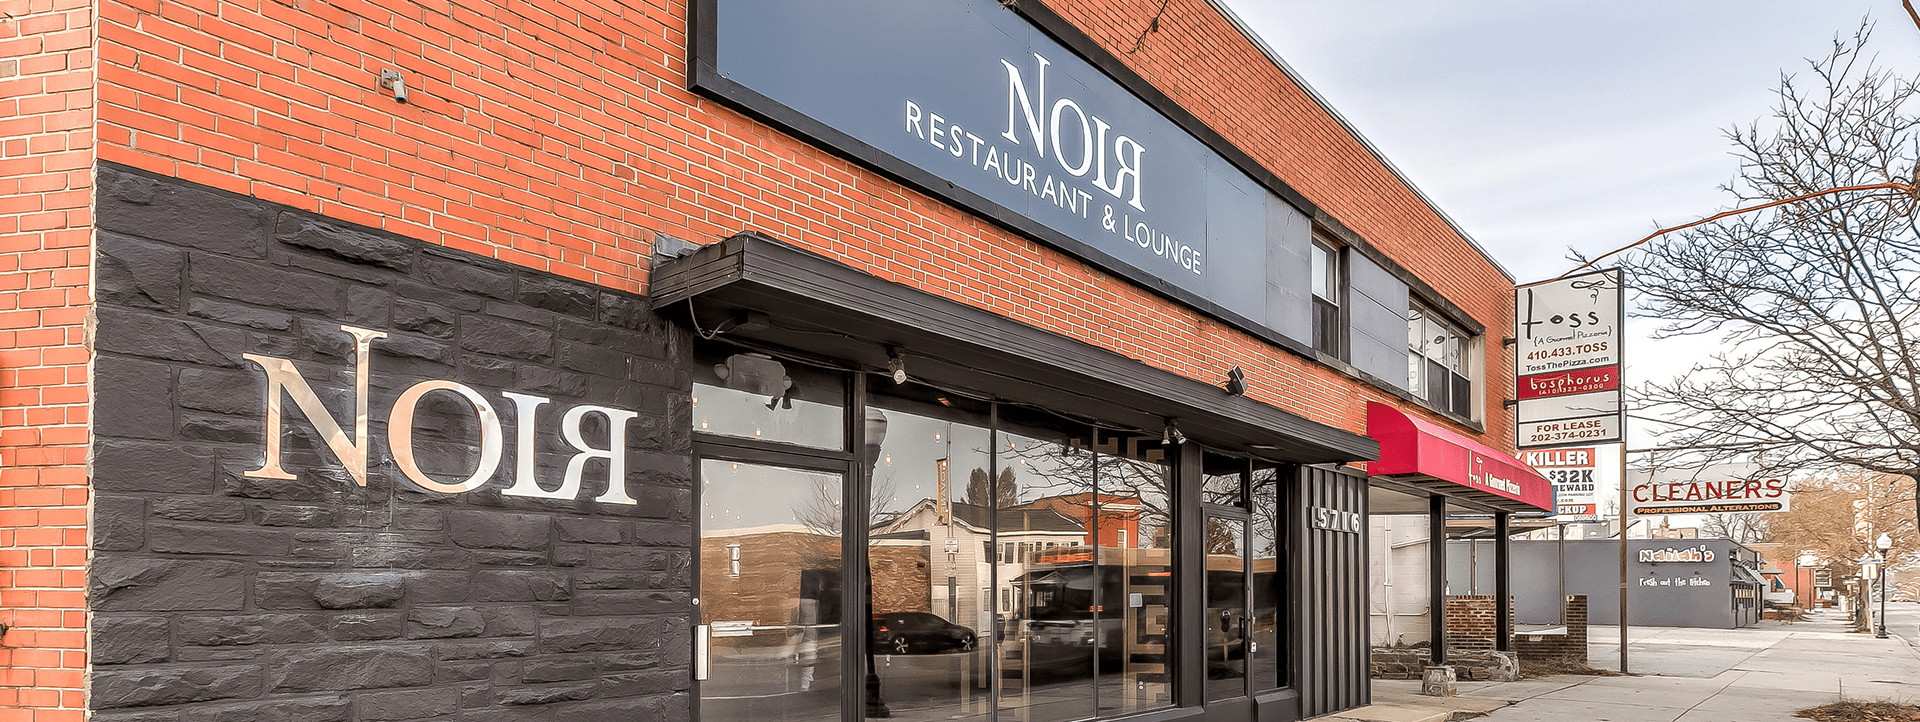 Noir Restaurant and Bar